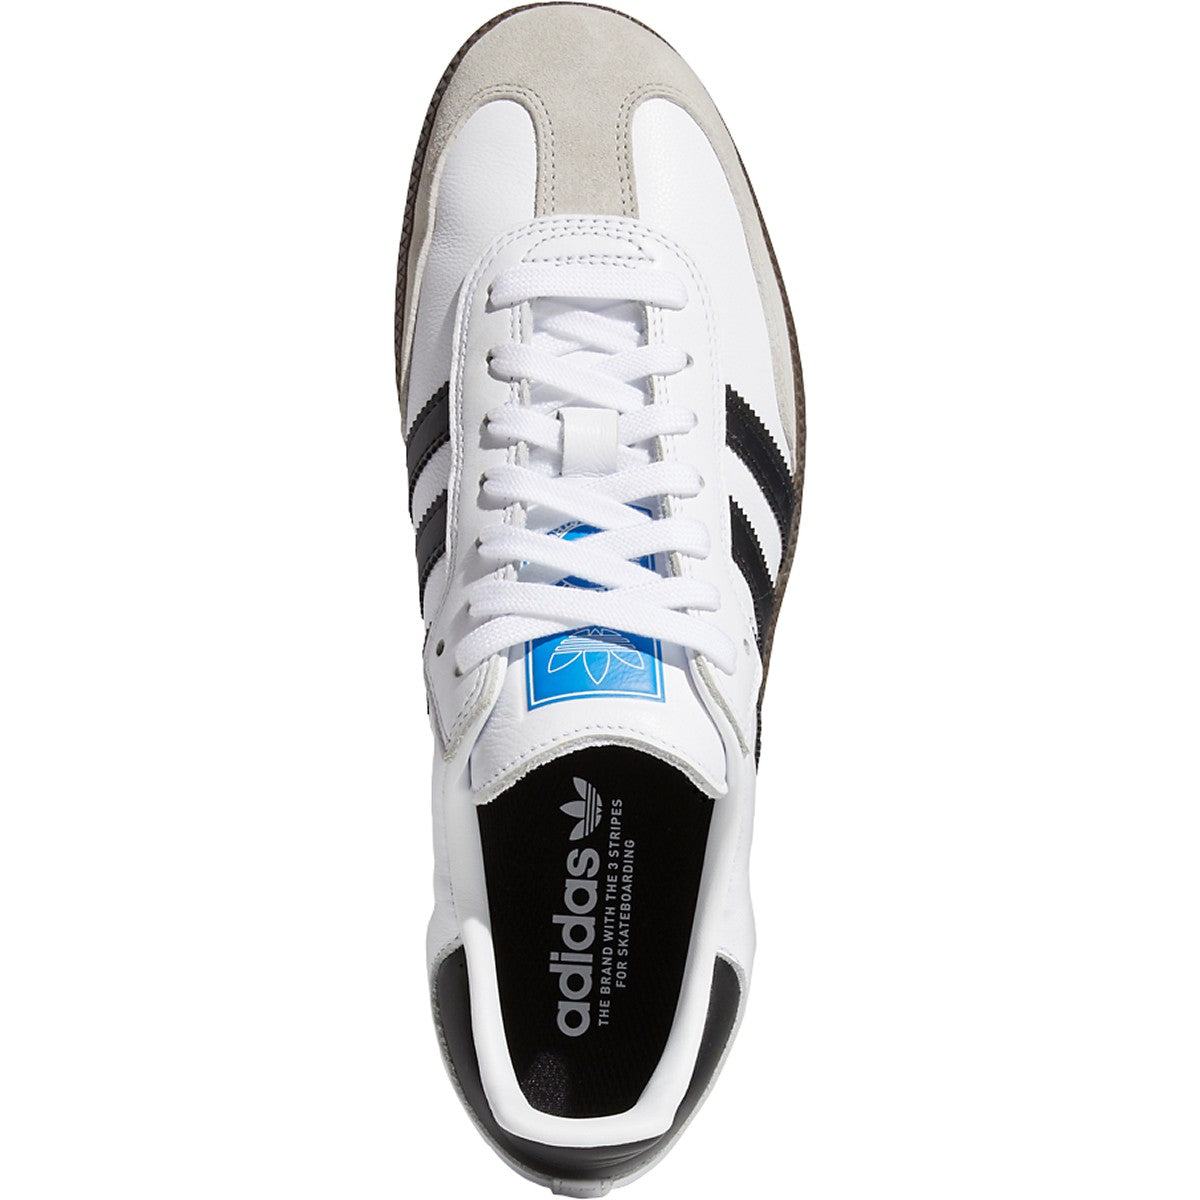 White/Black Samba ADV Adidas Skateboarding Shoe Top